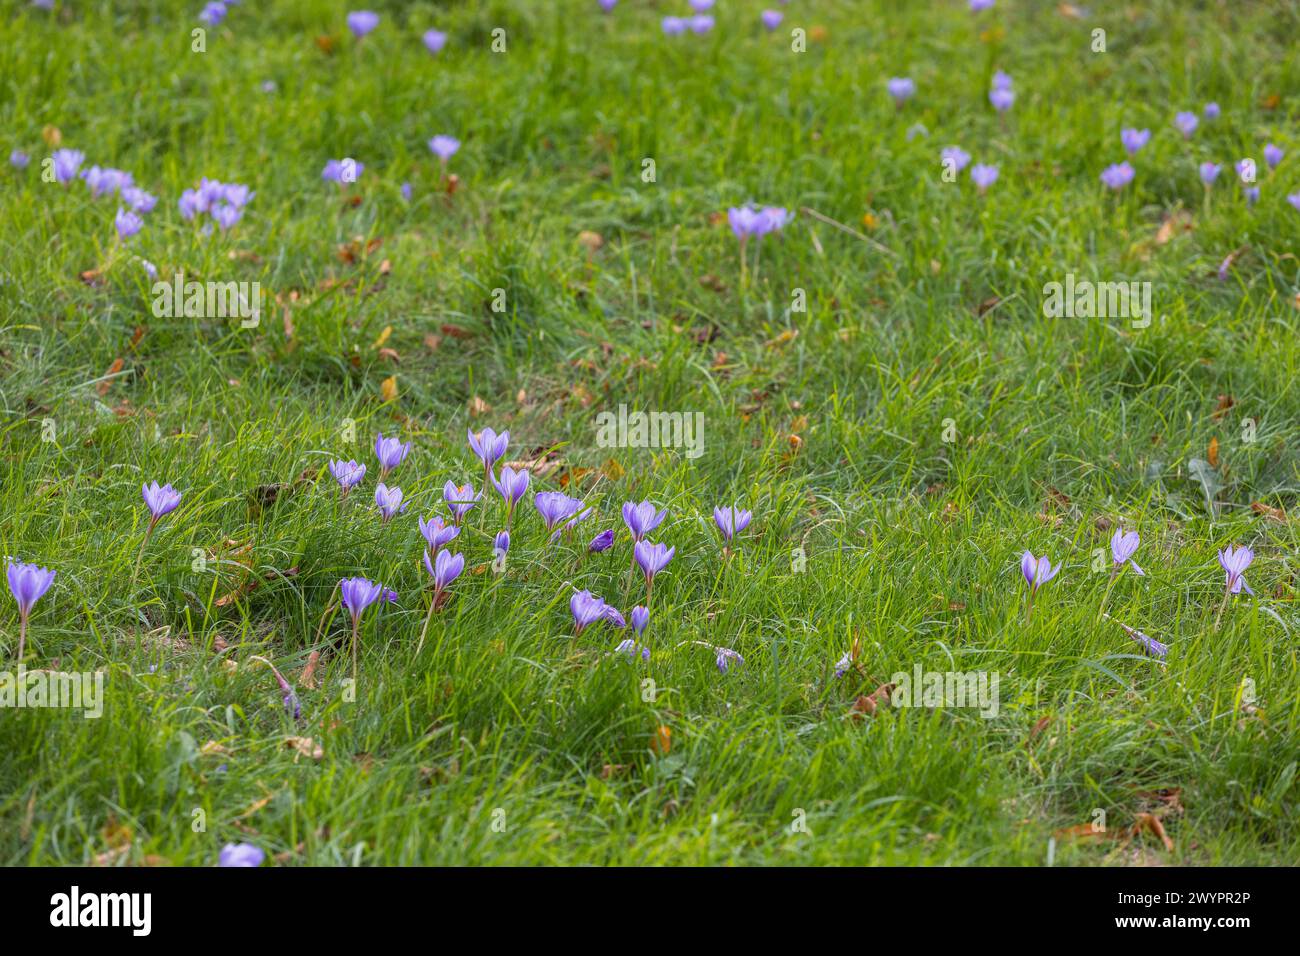 Naturalised Crocus / crocuses flowering in grass / lawn, autumn / fall Stock Photo